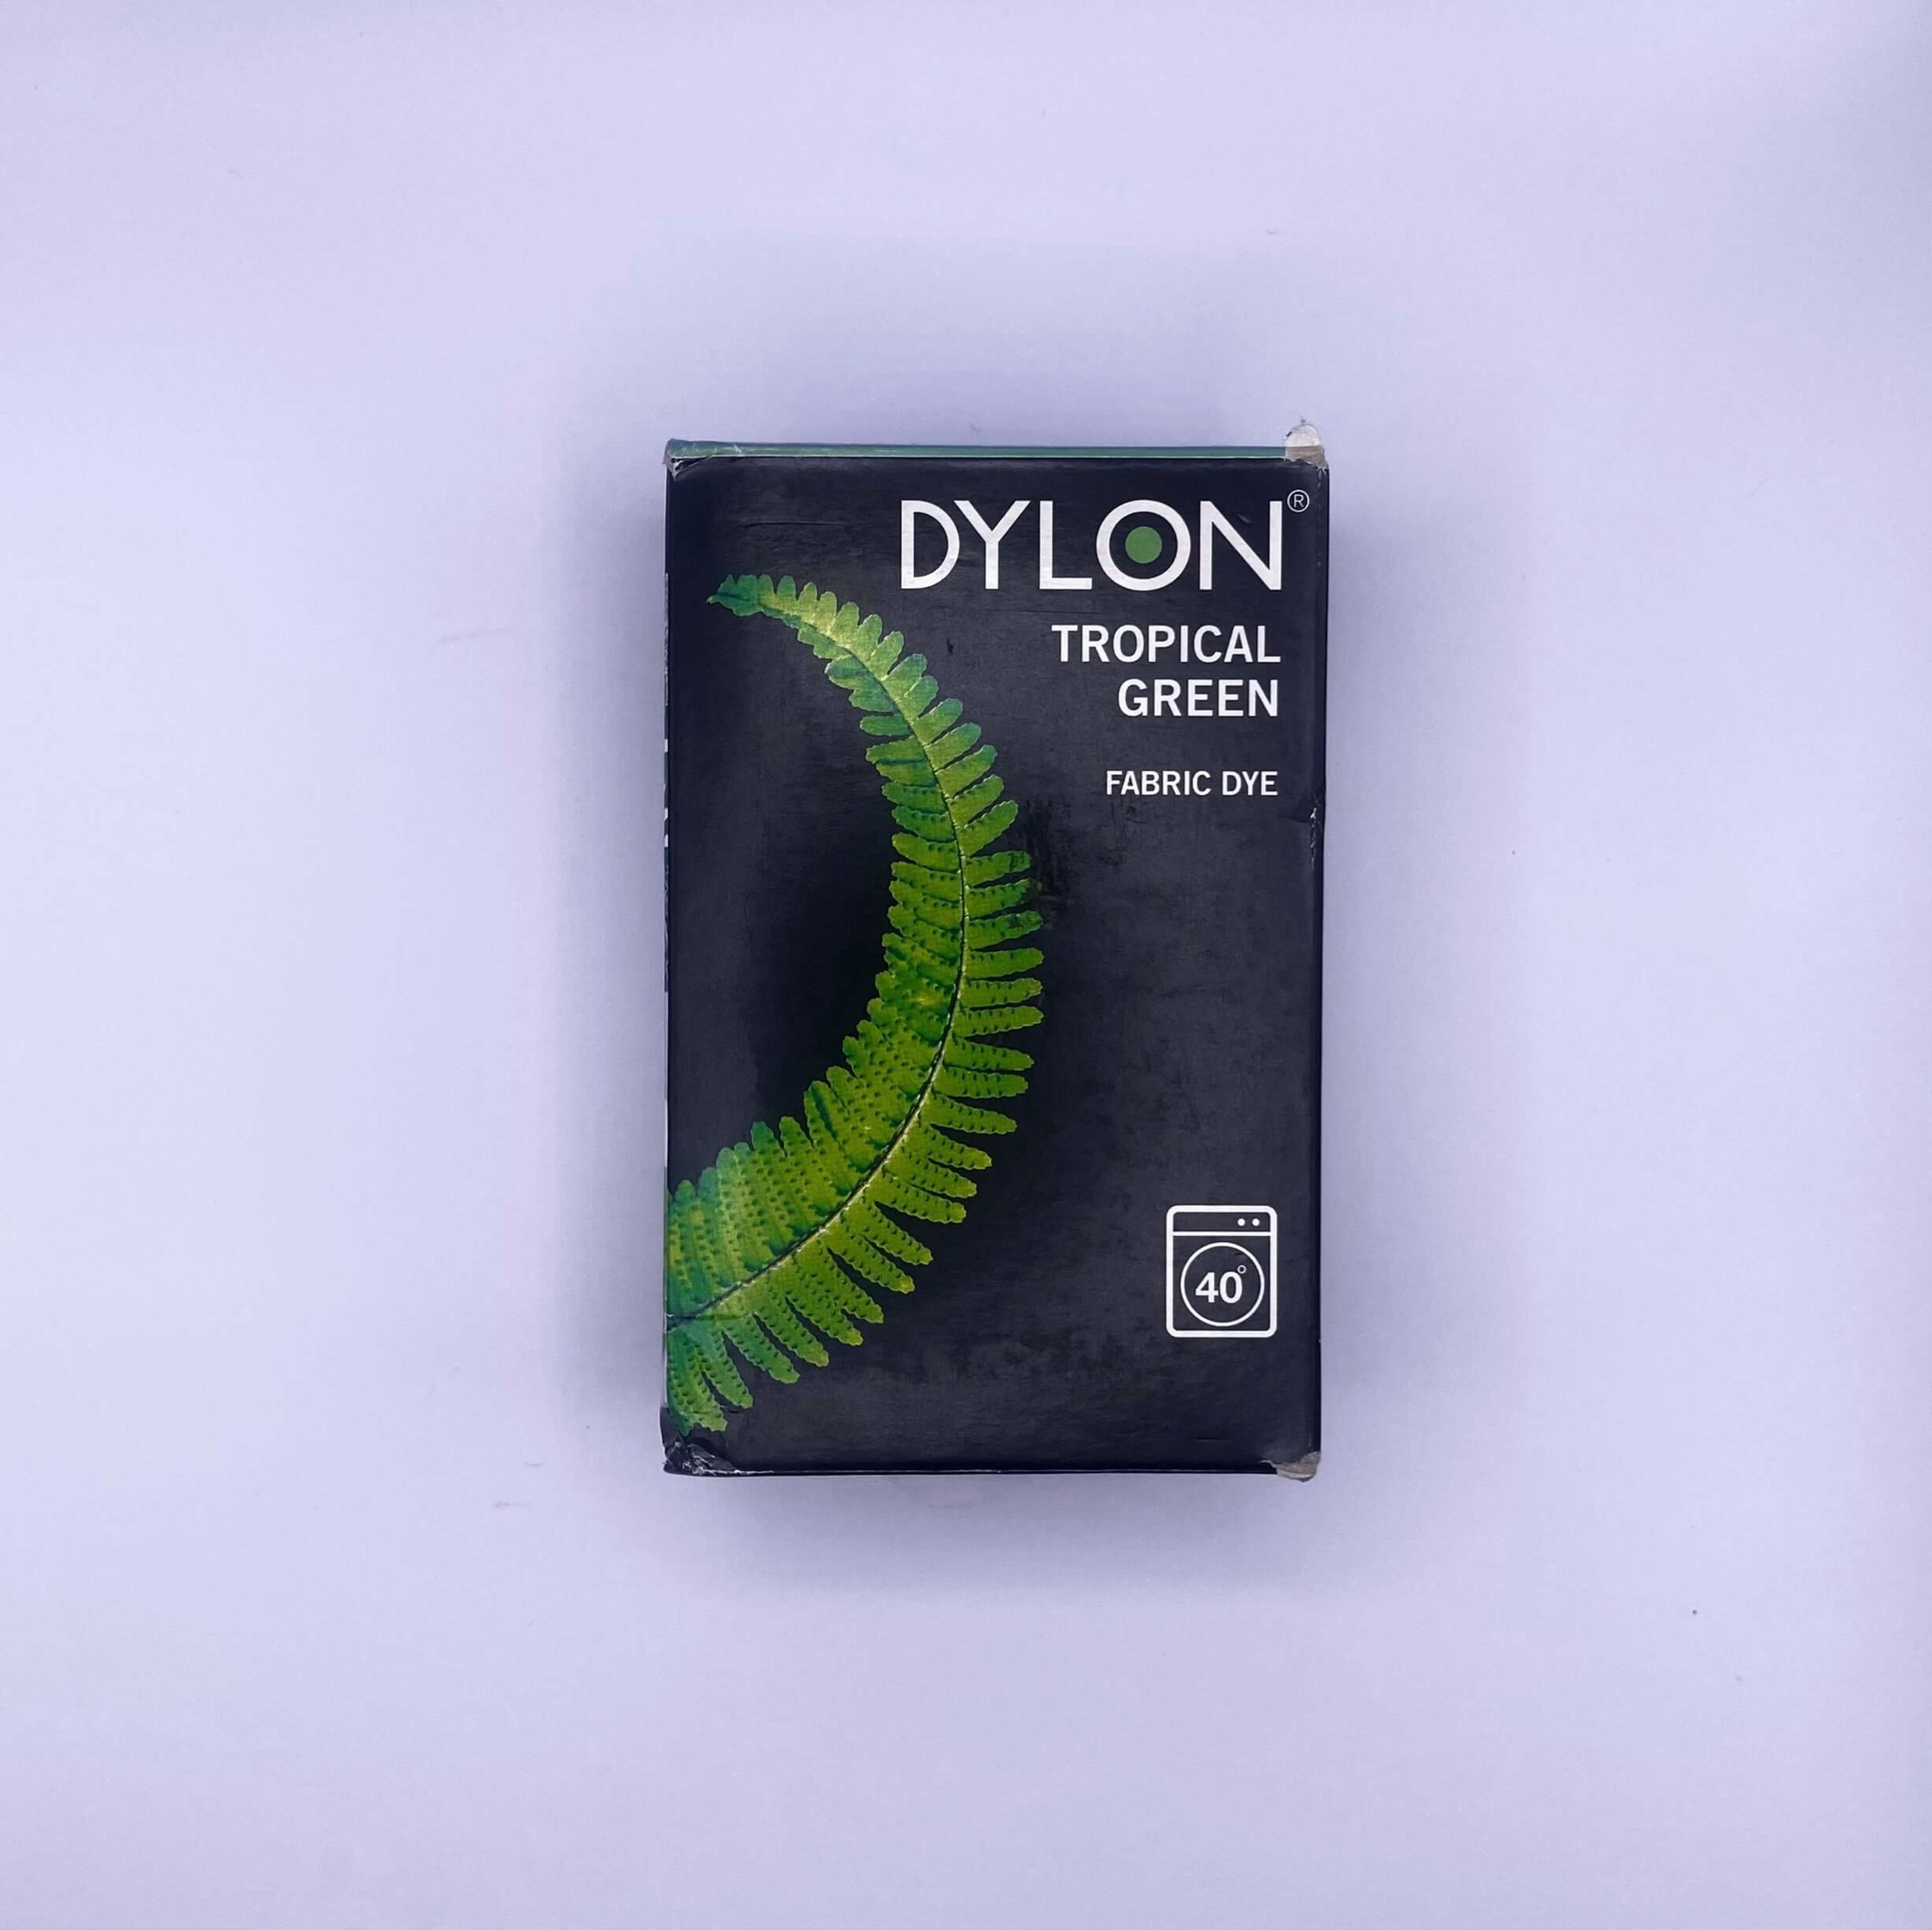 Dylon Hand Fabric Dye Tropical Green